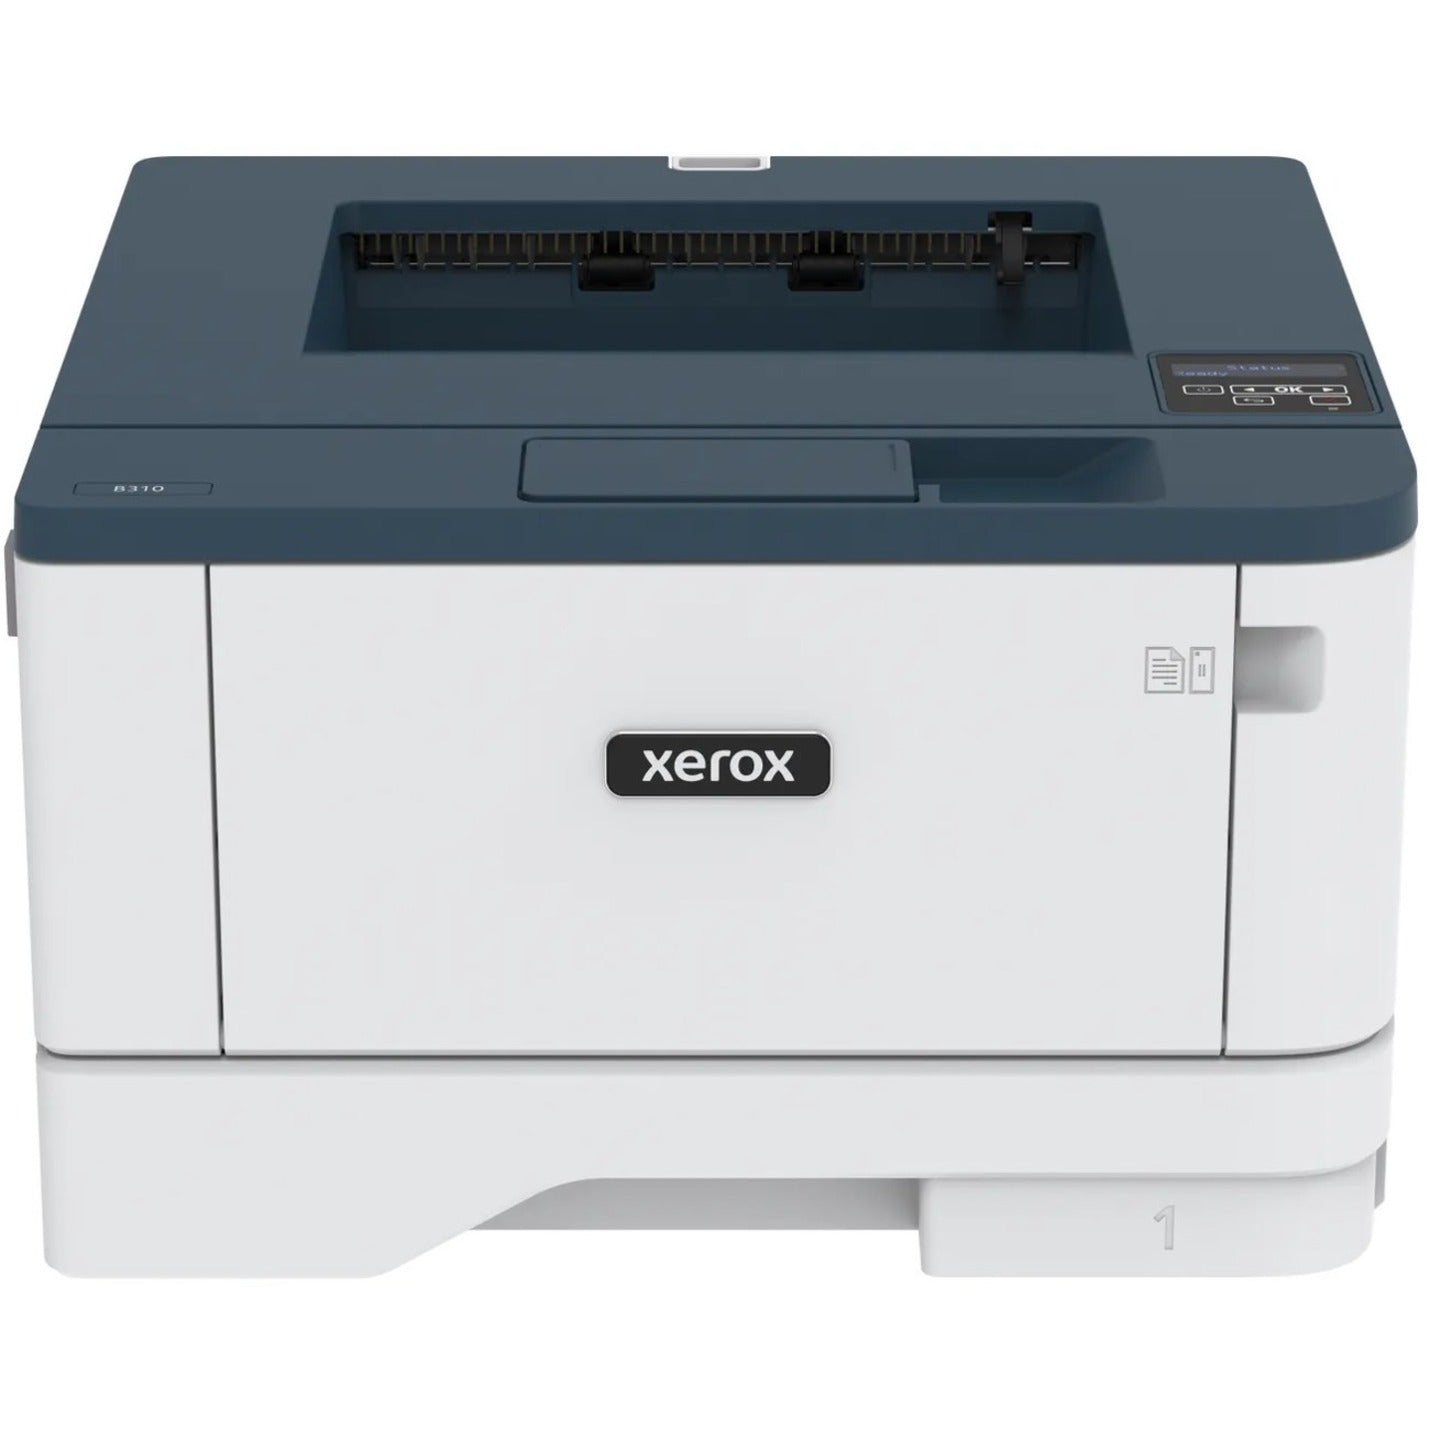 Xerox B310/DNI Desktop Wireless Laser Printer - Monochrome, 42 ppm, Automatic Duplex Printing, Wireless Connectivity